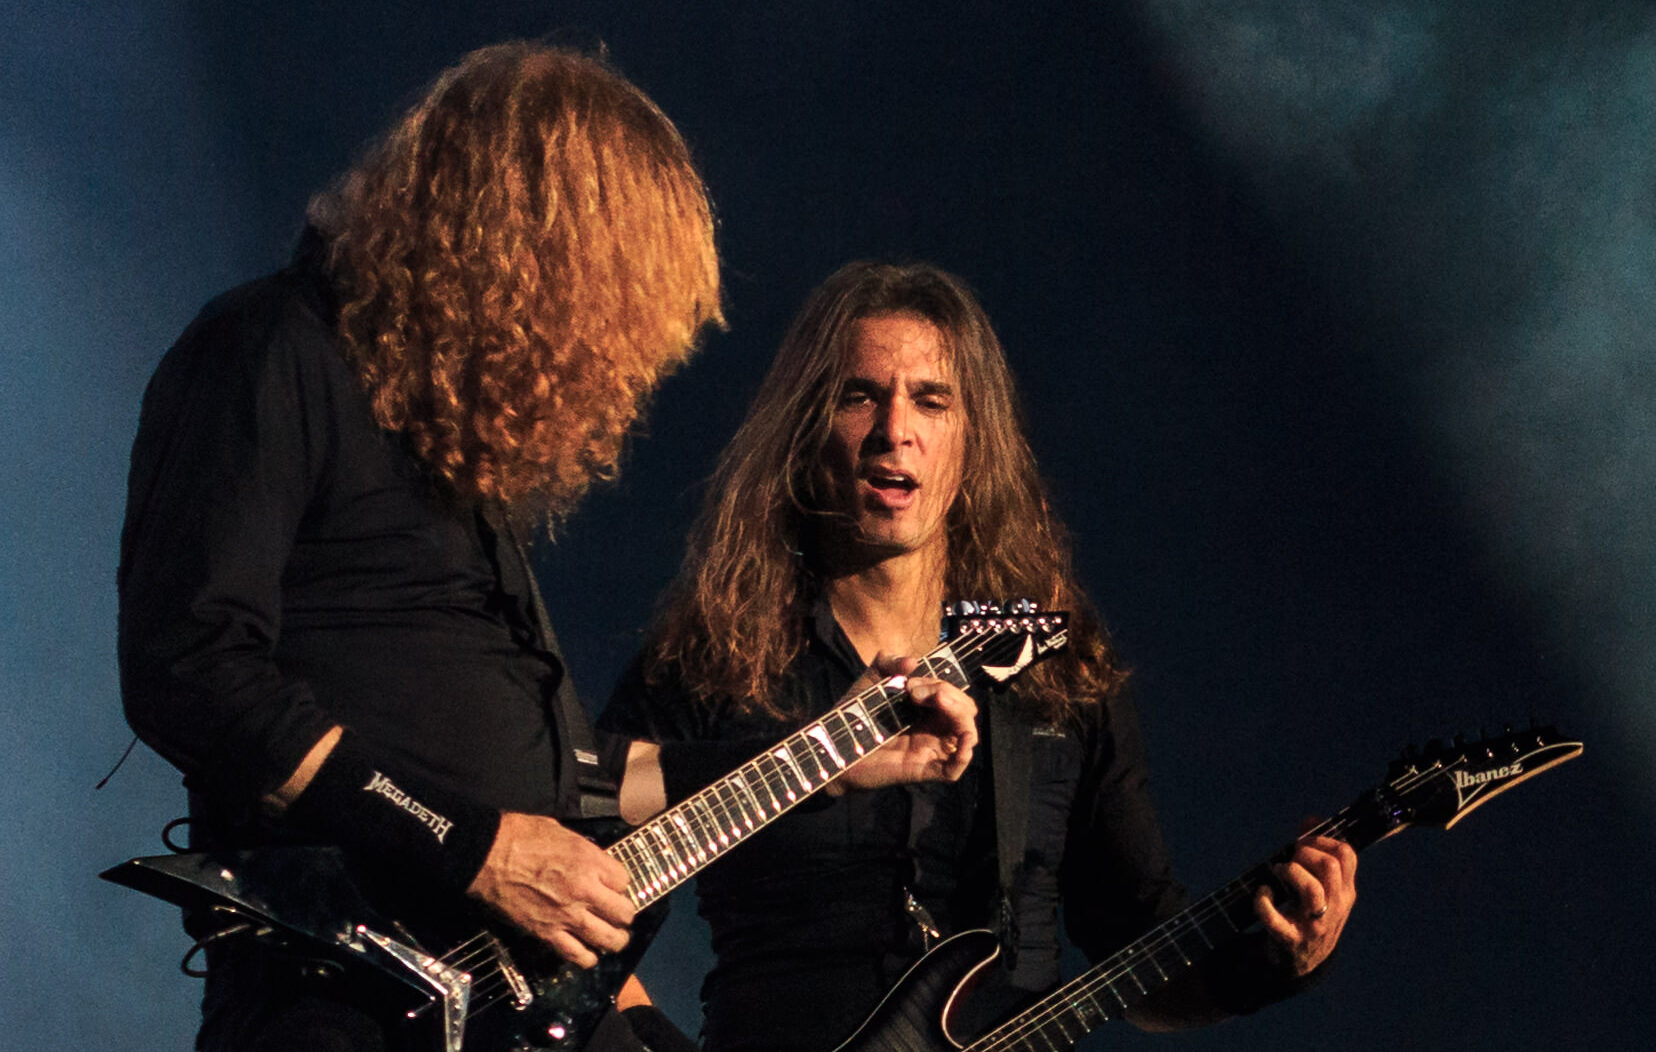 Dave_Mustaine_and_Kiko_Loureiro_live_in_London_2018-06-16